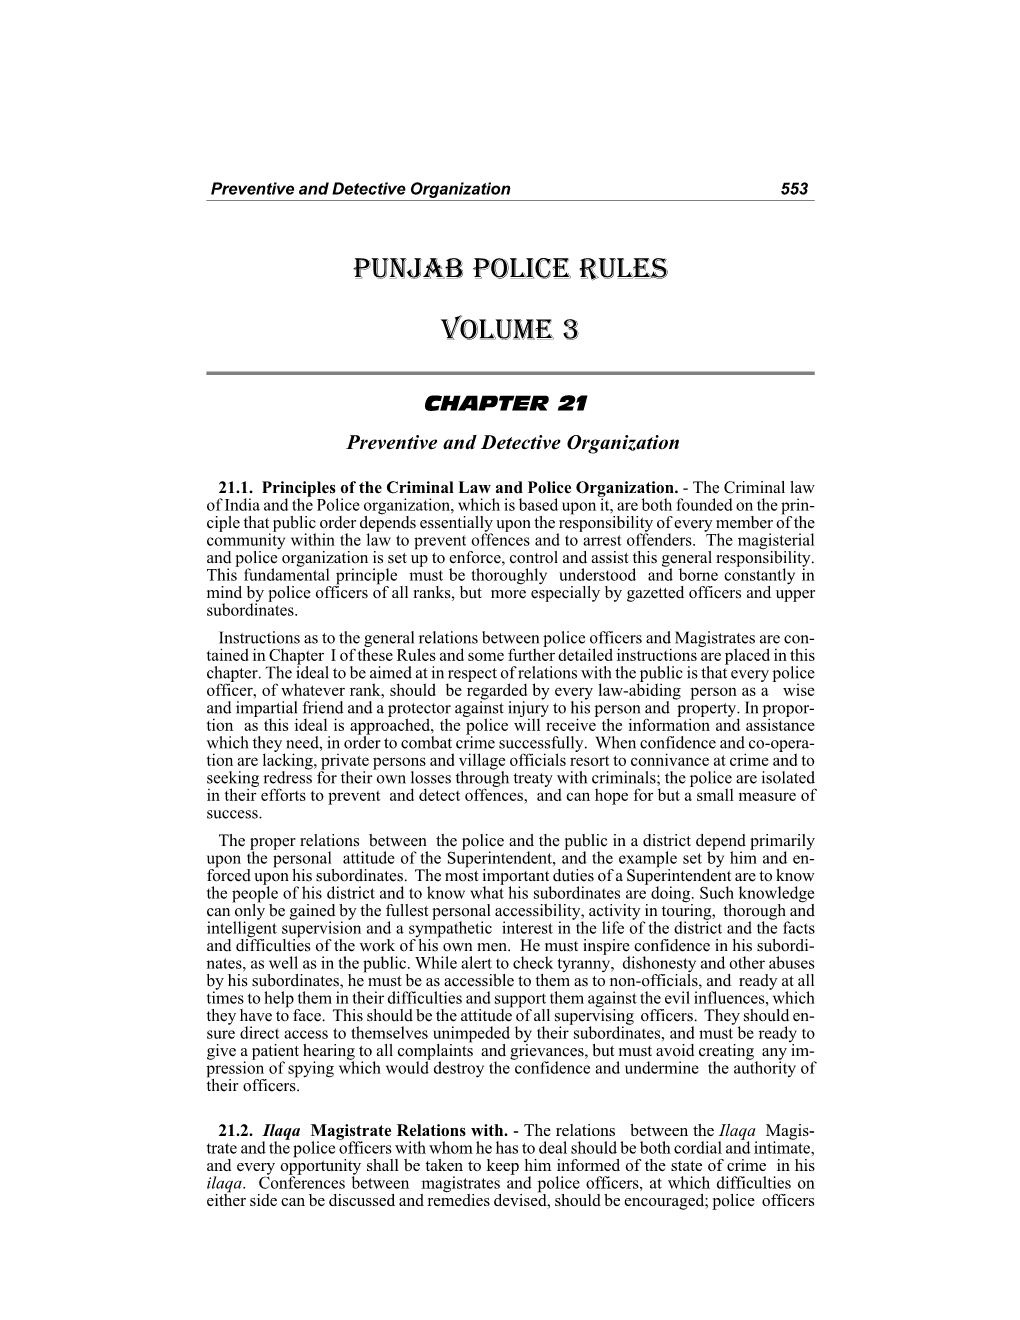 Punjab Police Rules Volume 3 1977 Edition